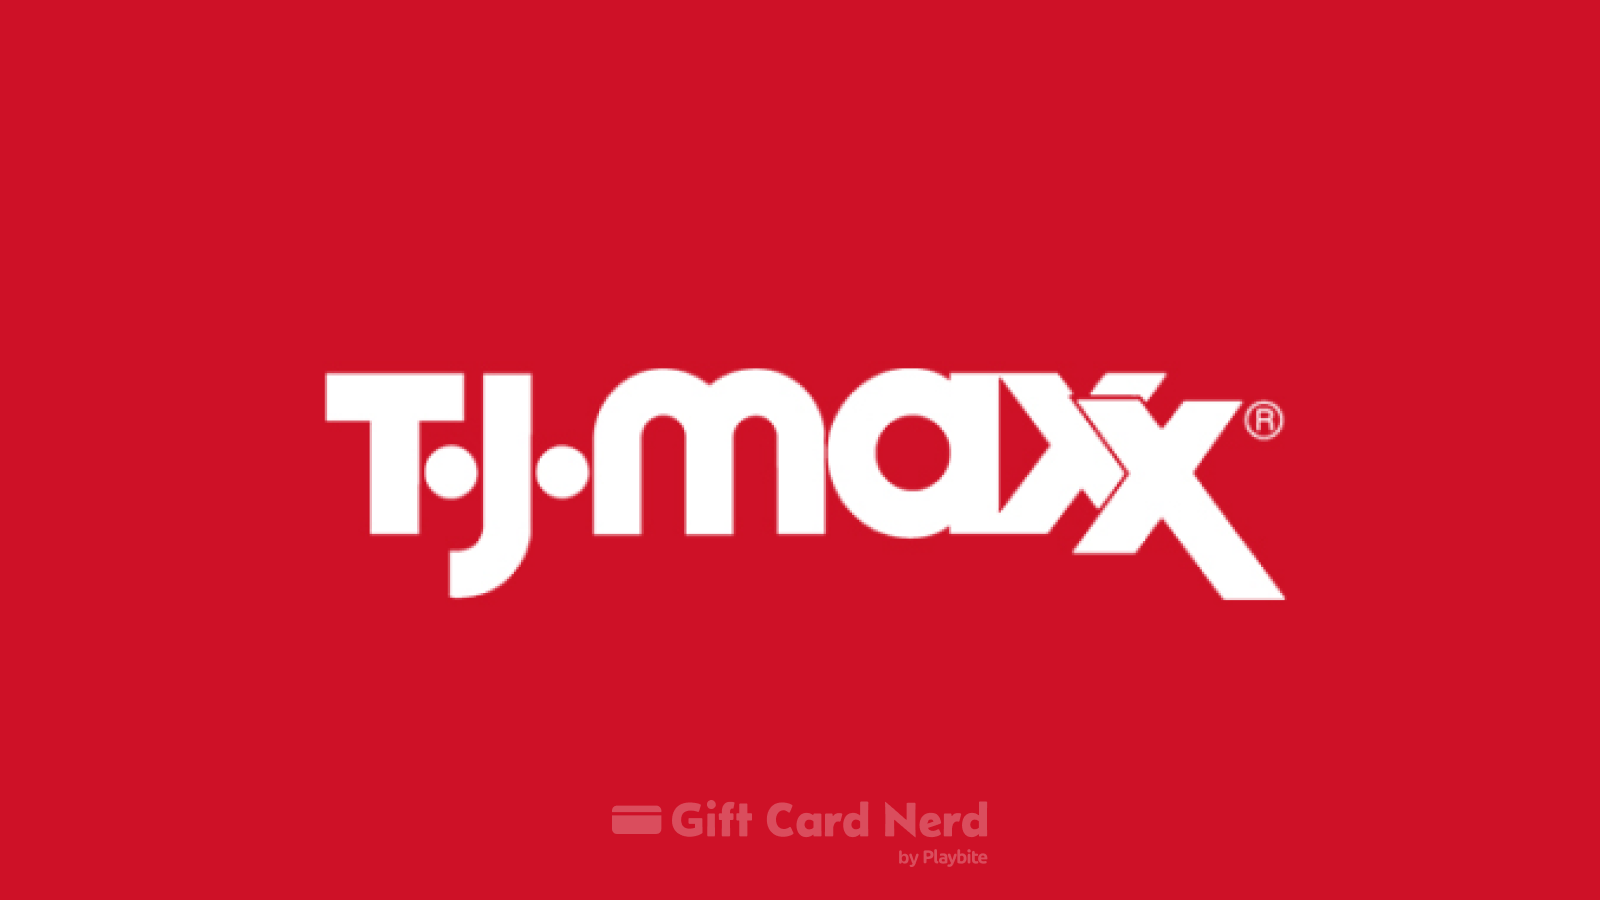 Can I use a TJ Maxx gift card on DoorDash?